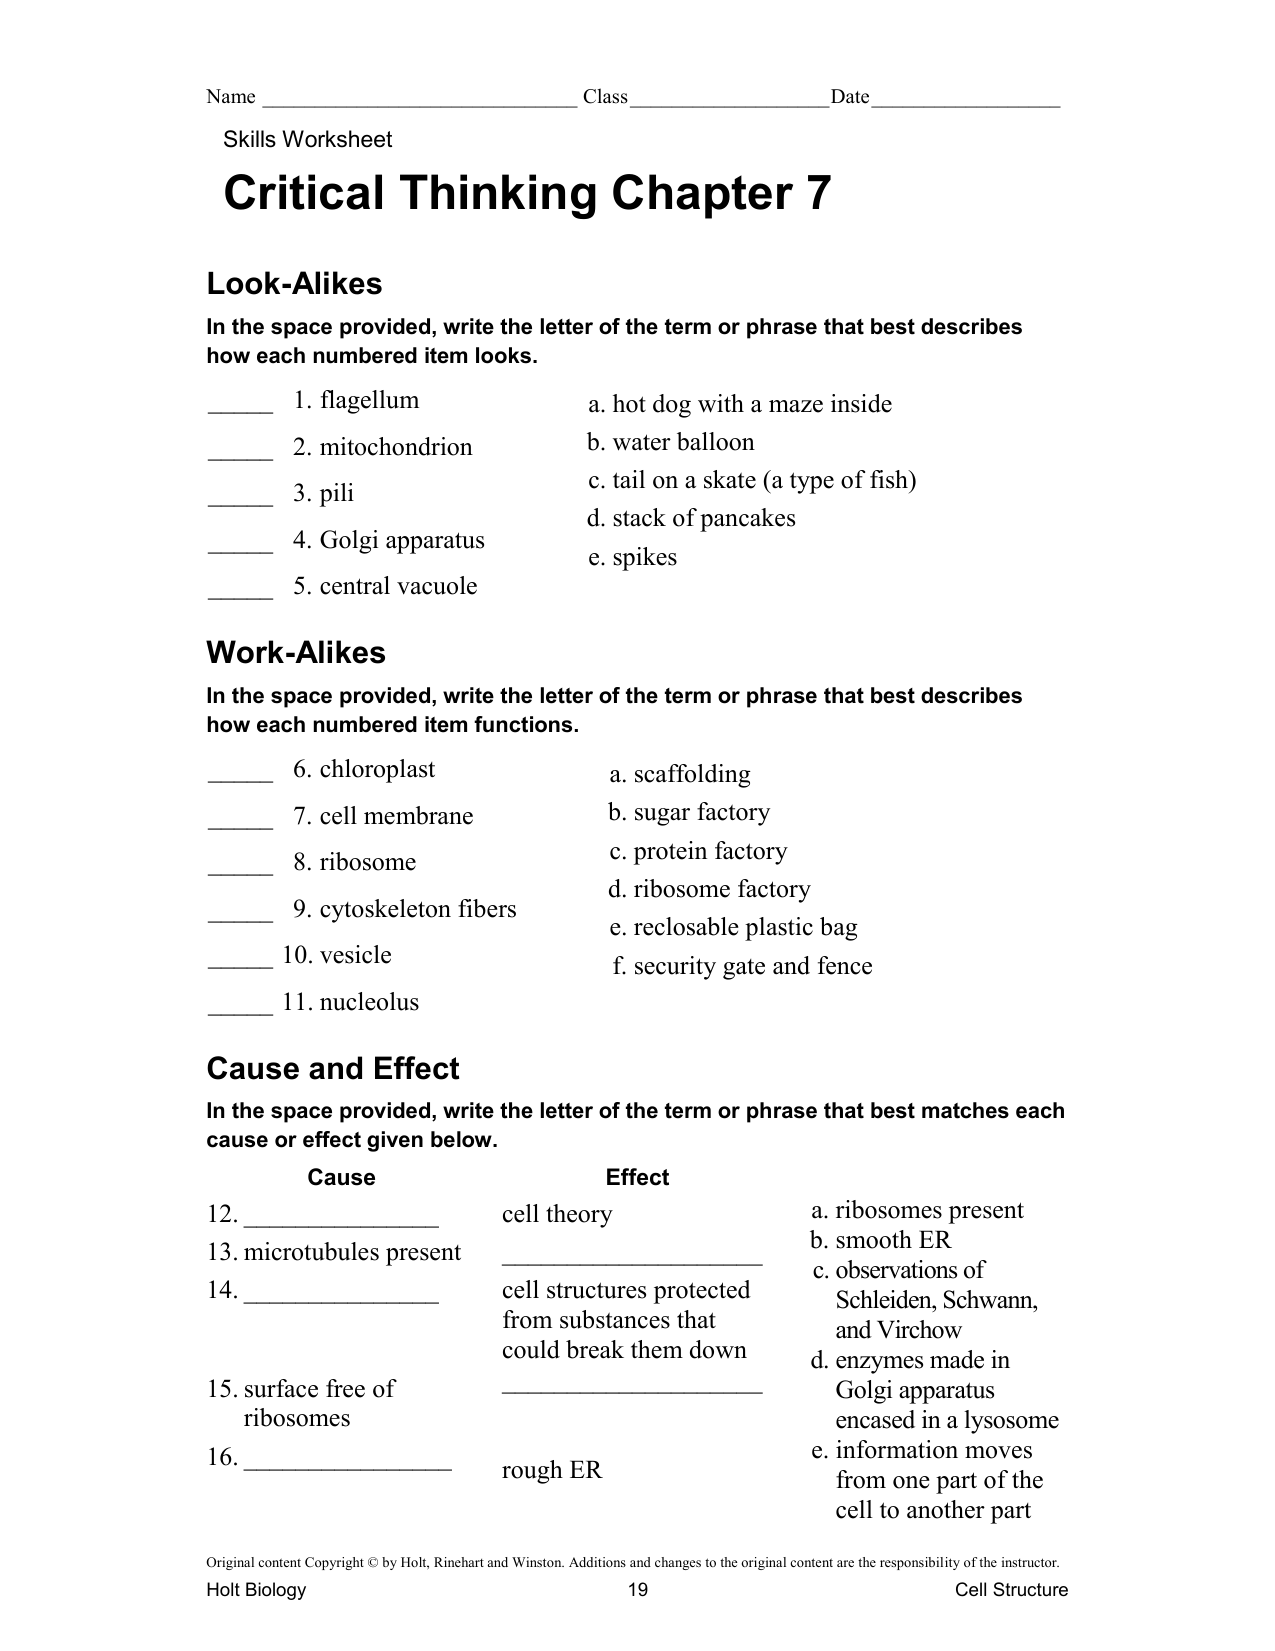 critical thinking skills worksheet answers